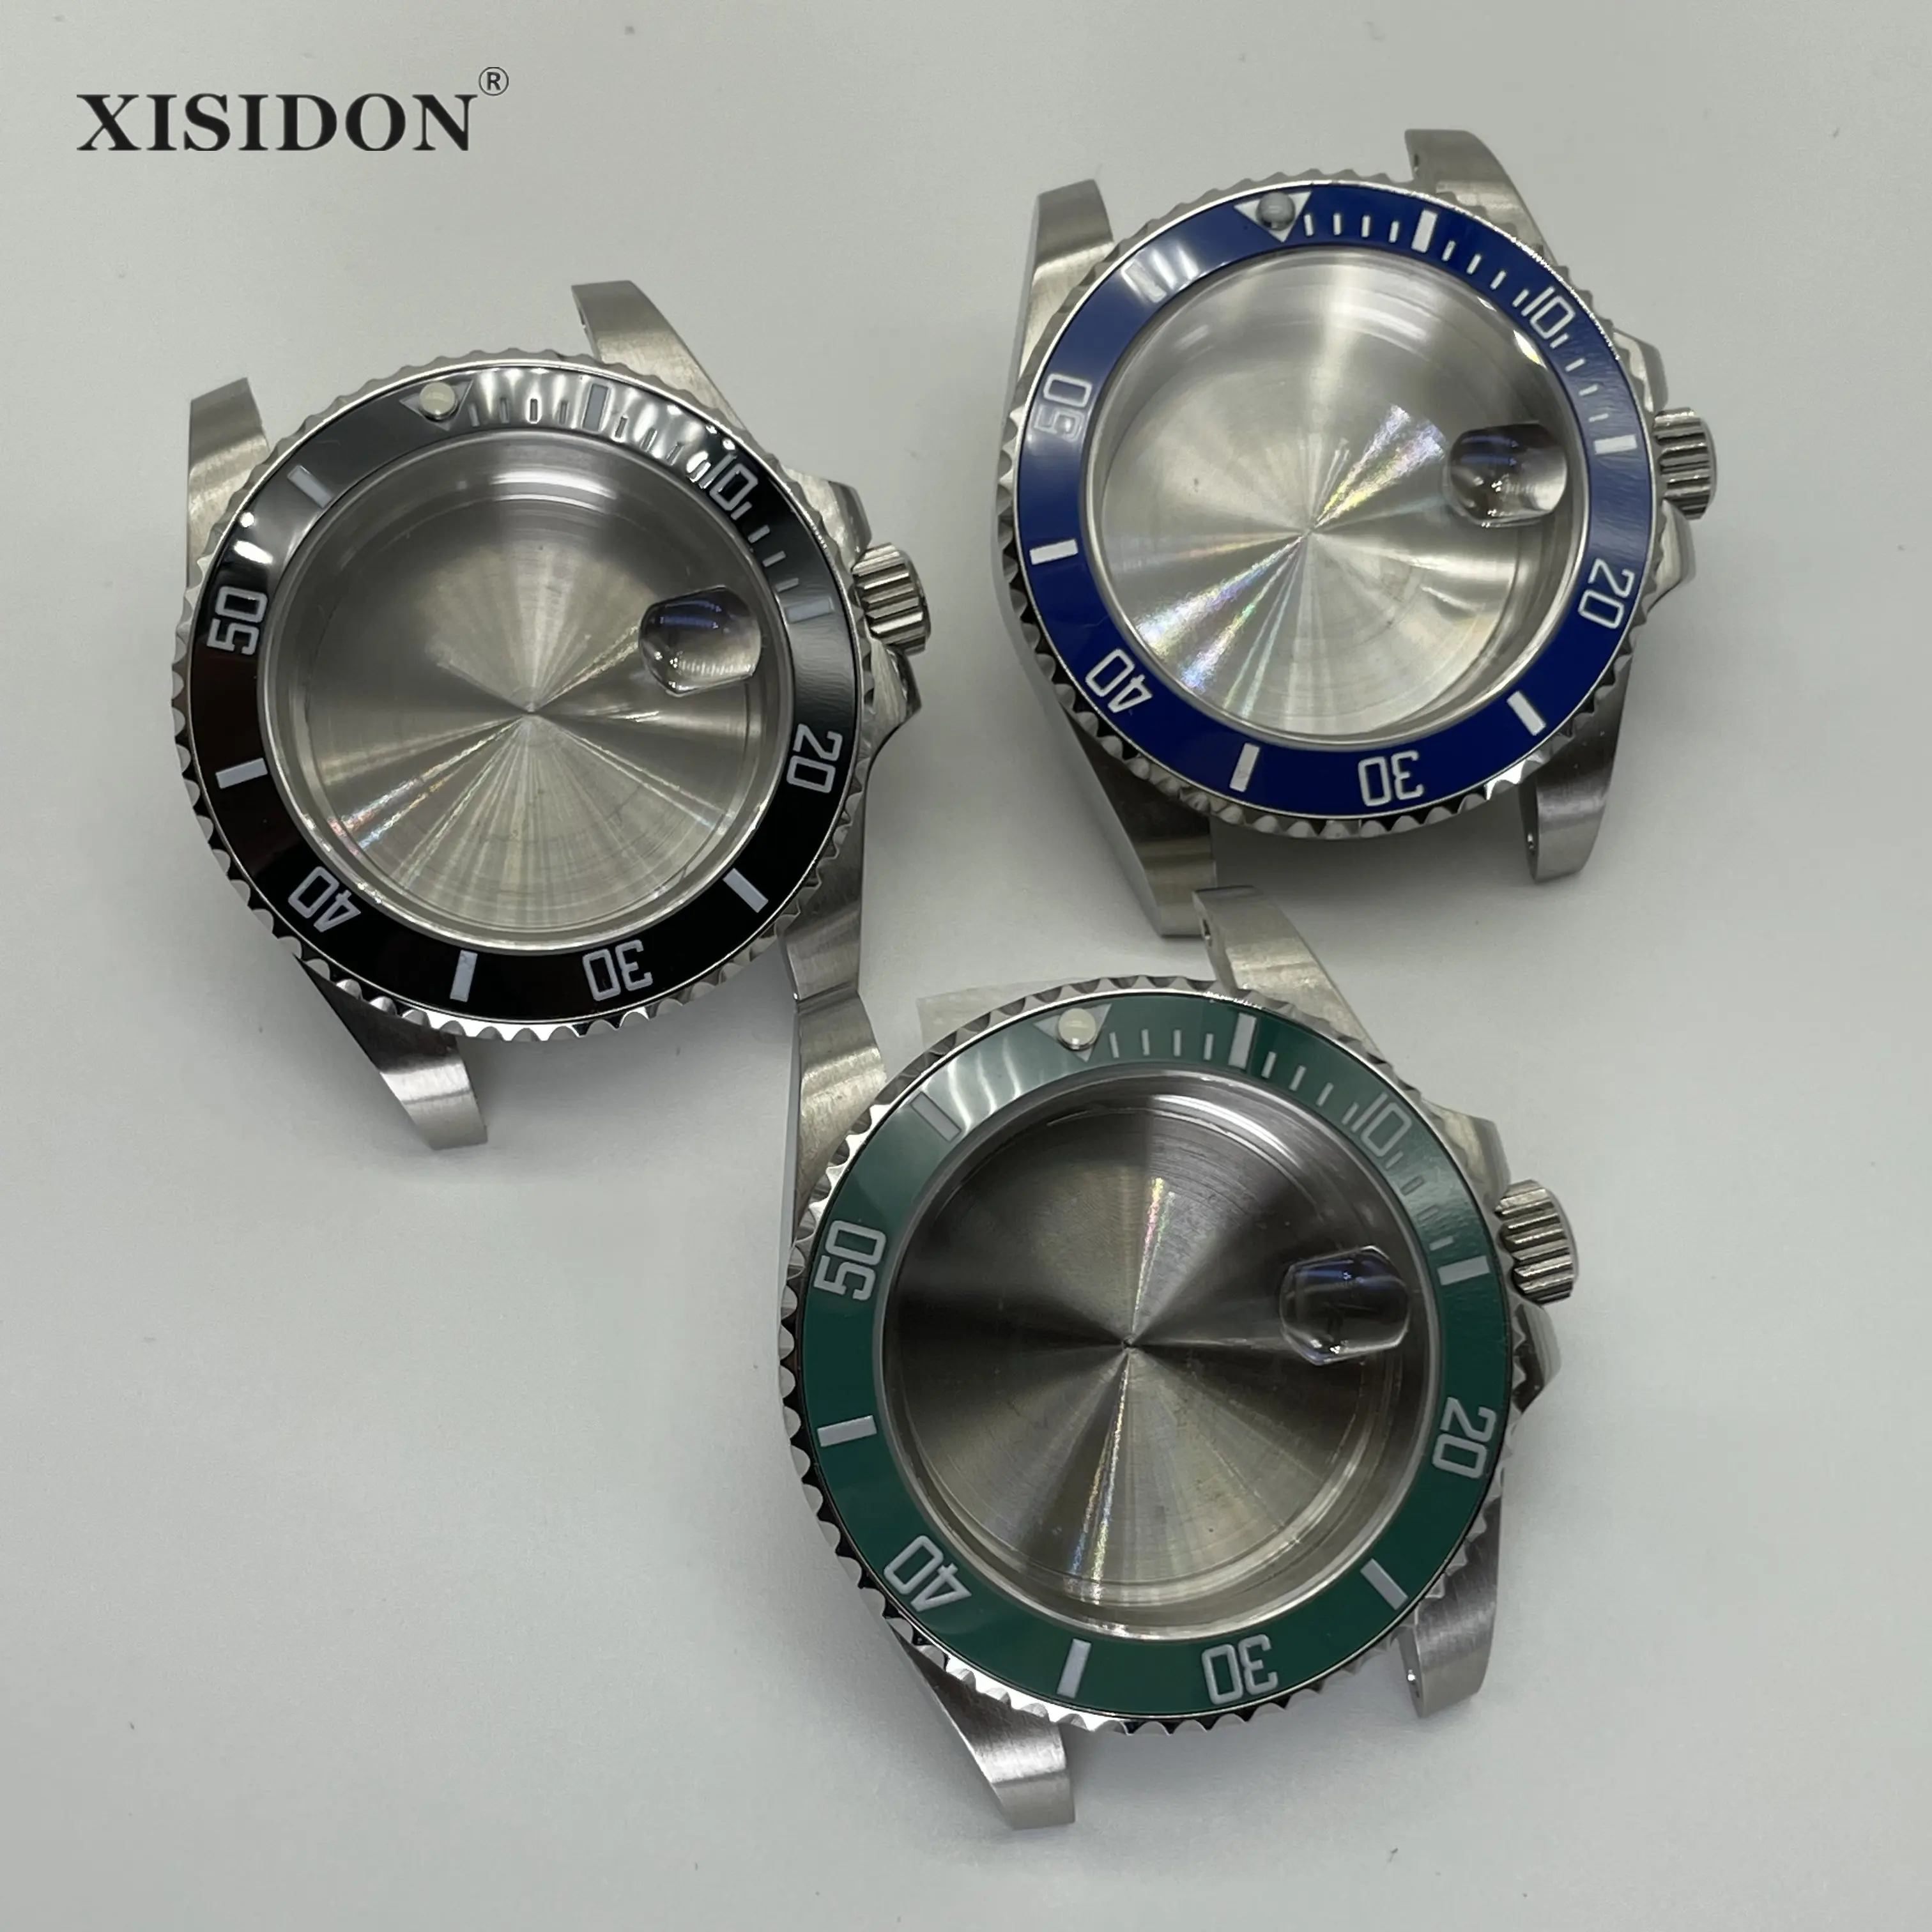 

40mm Submariner Cases Men's Watch Ceramic Bezel Stainless Steel Sapphire Glass Fit nh35 nh36 eta 2824 miyota 8215 Dial Movement